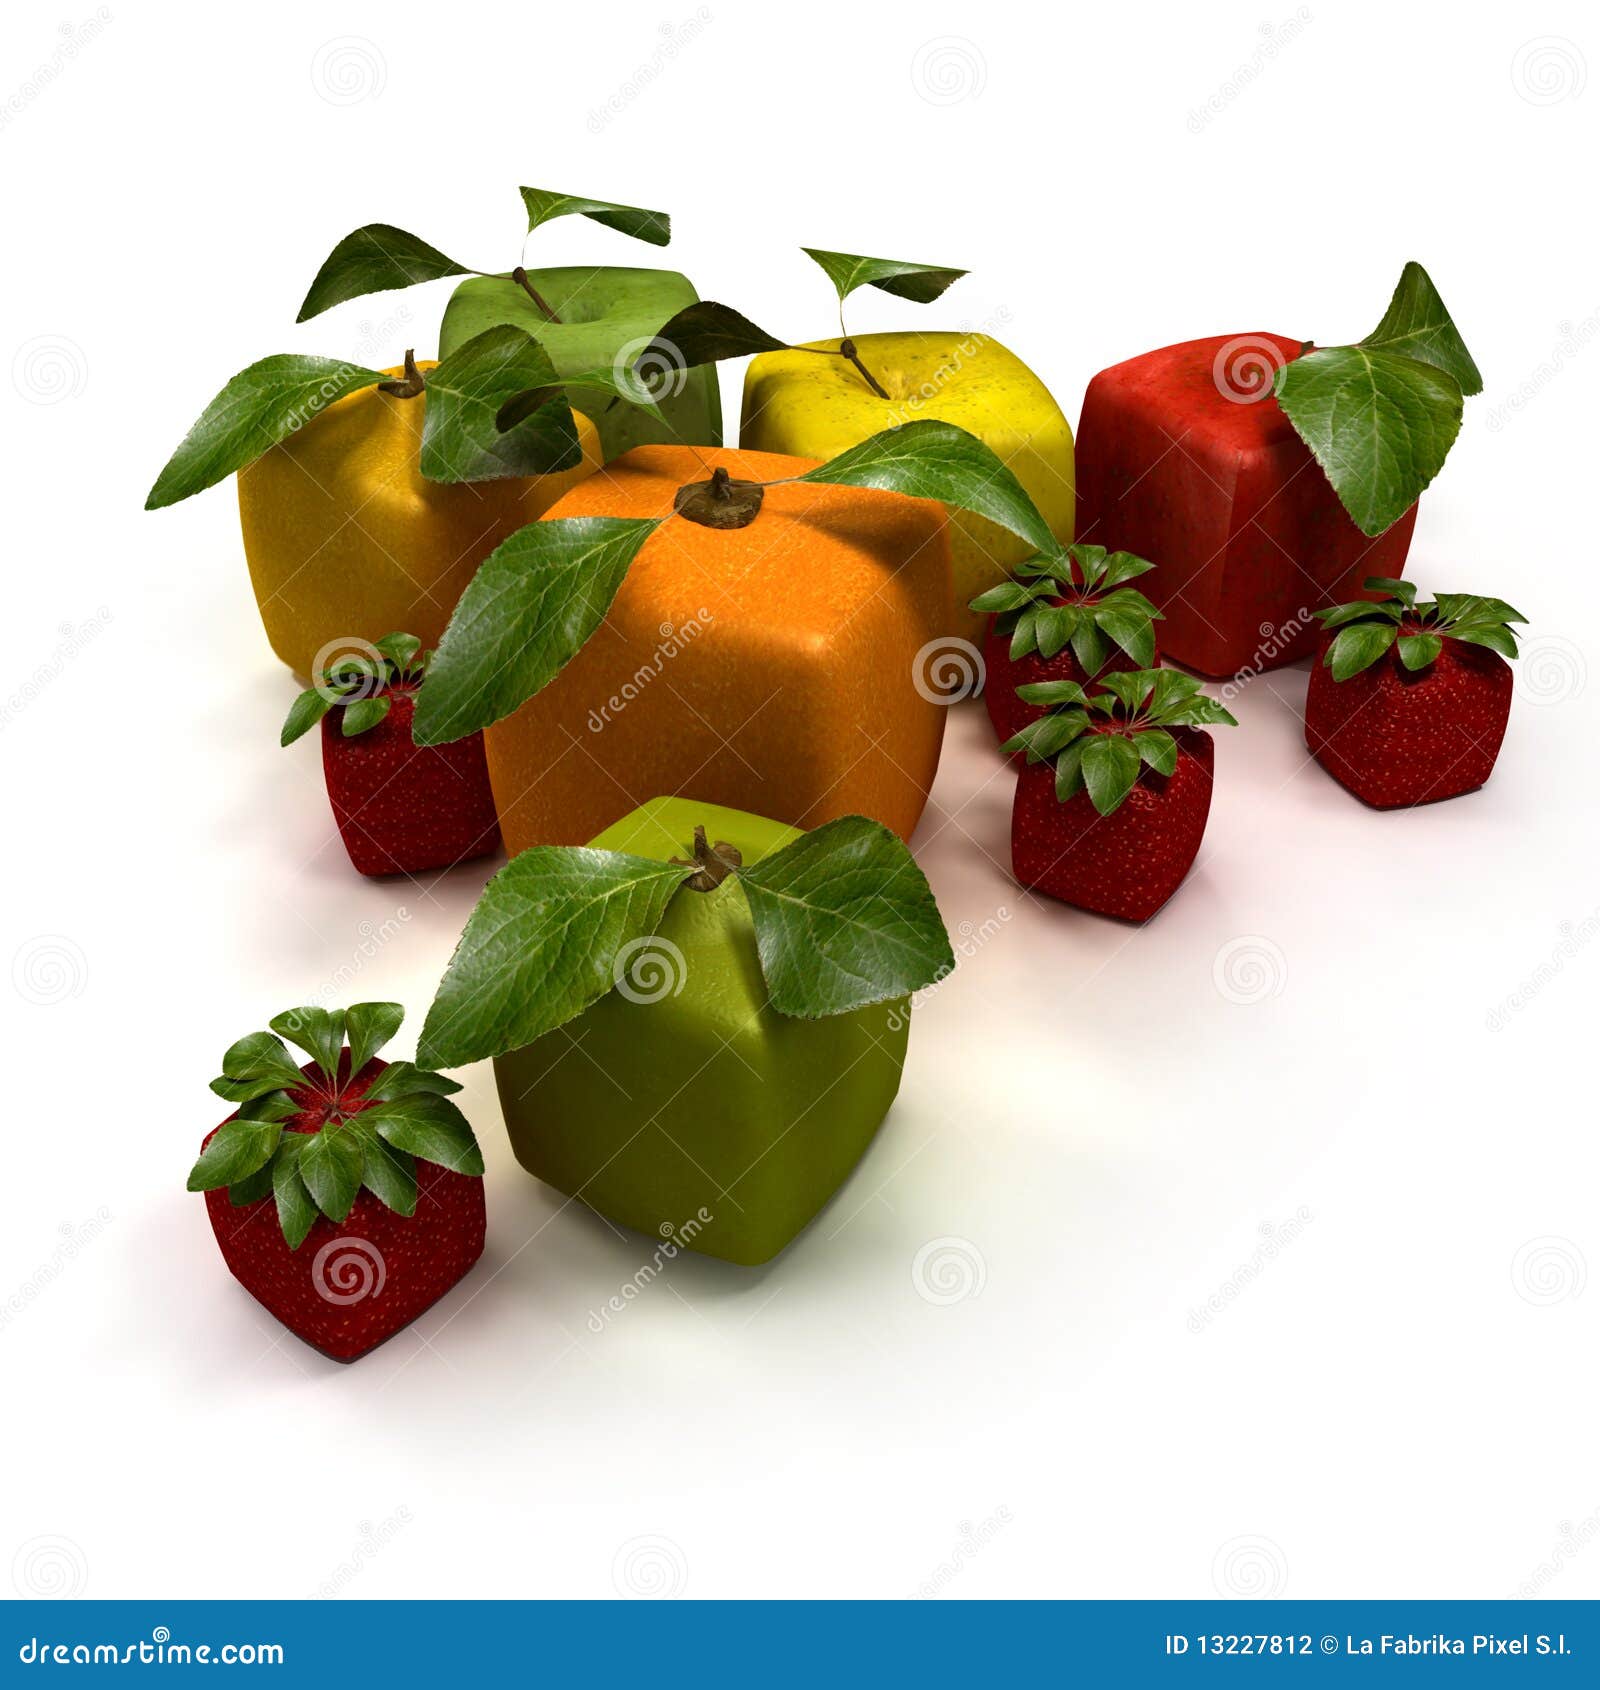 cubic fruits